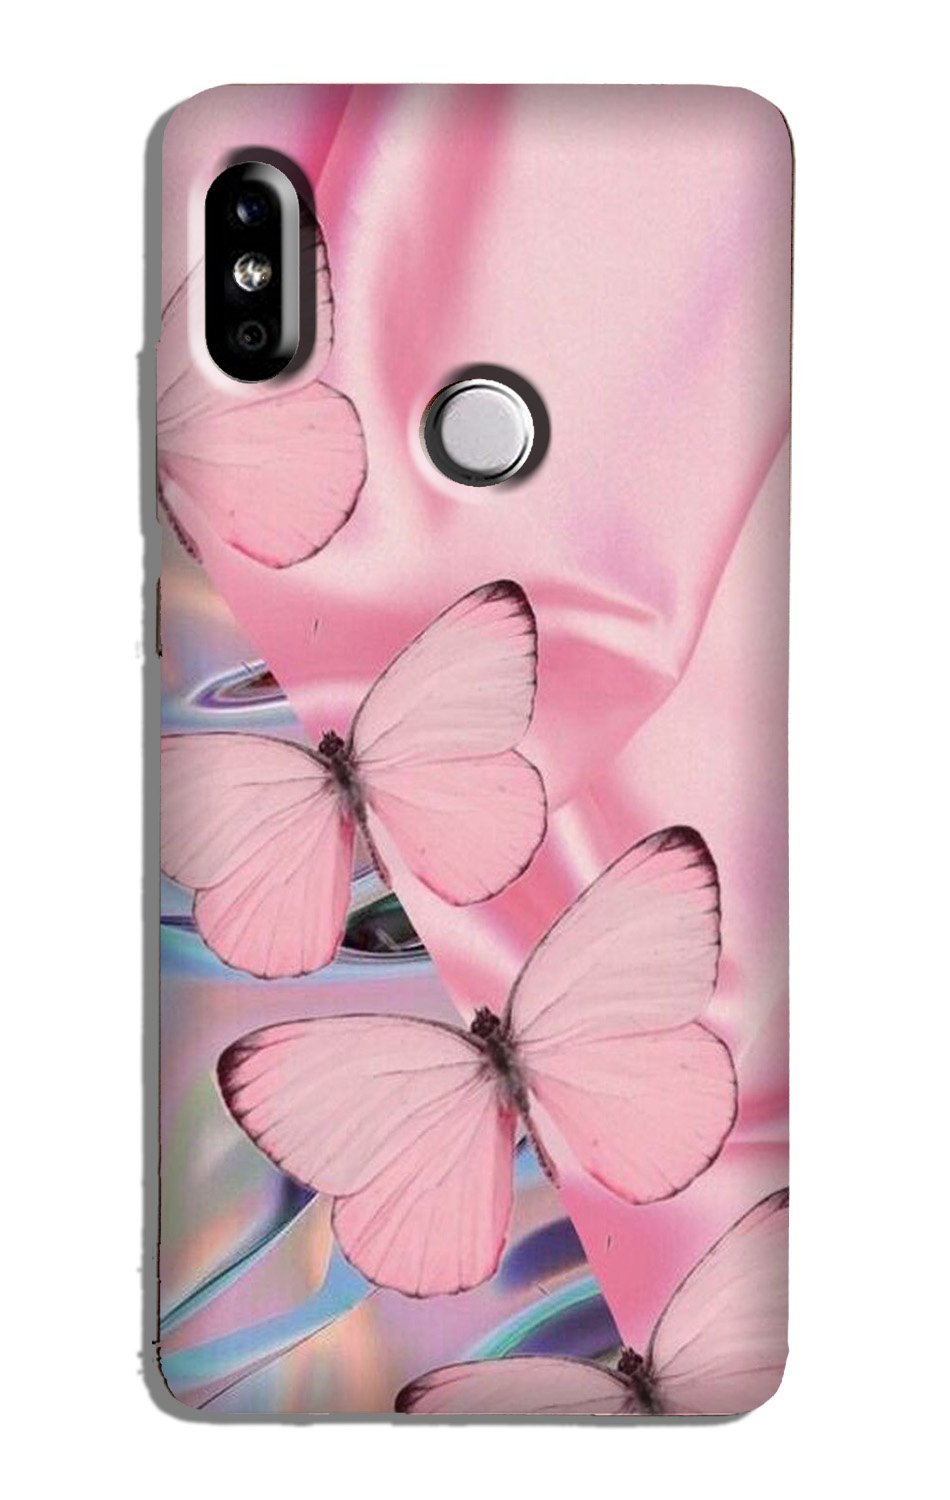 Butterflies Case for Xiaomi Redmi Y3